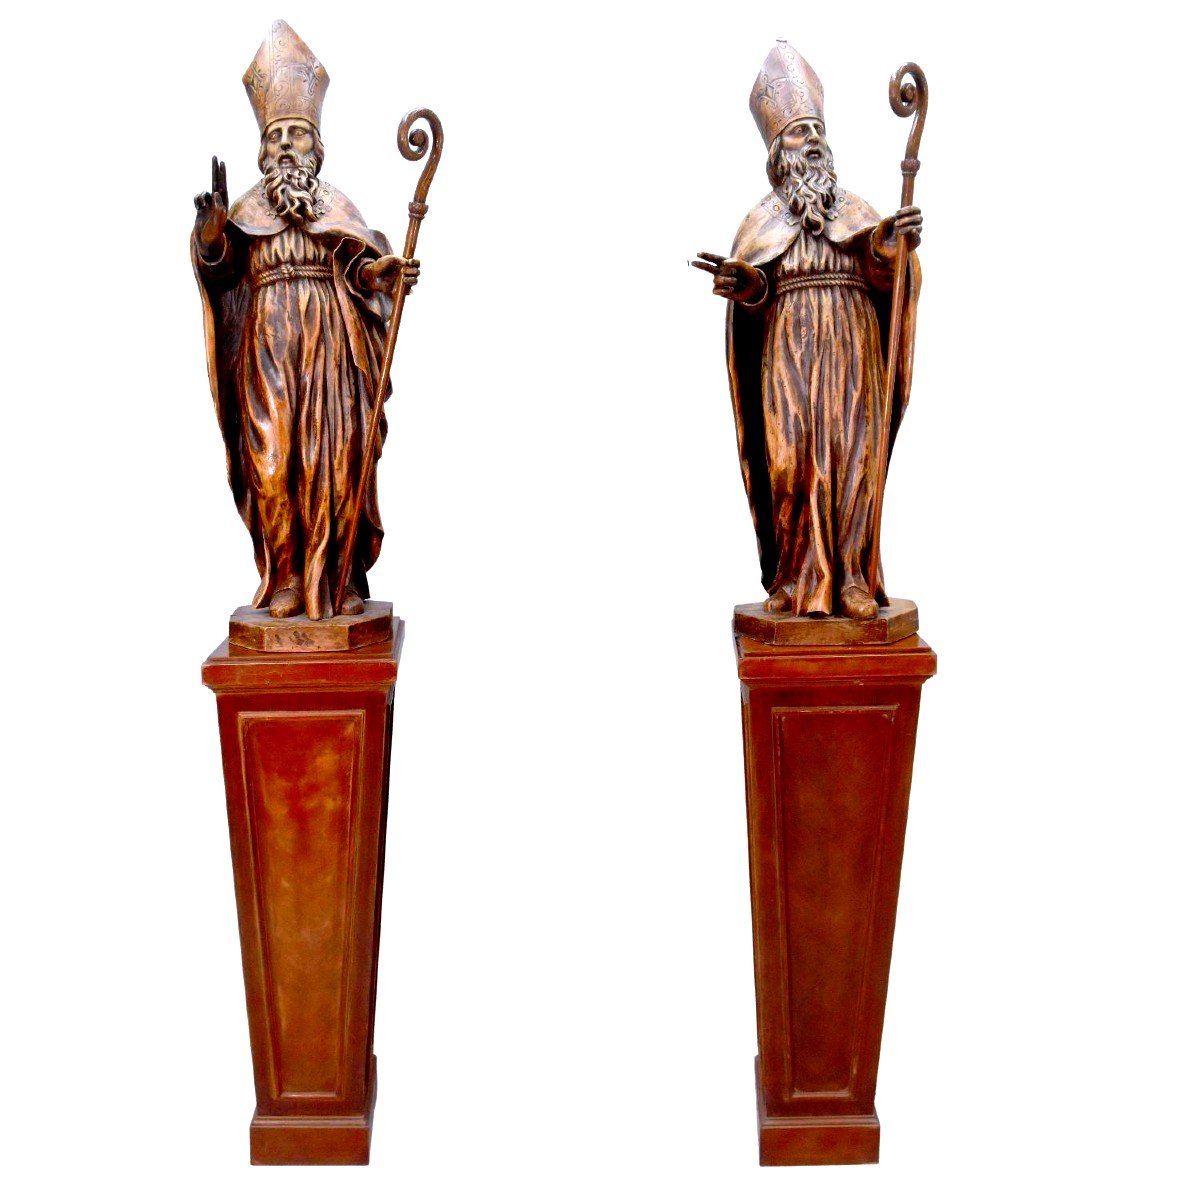 Pair Of Wooden Sculptures Representing 2 Bishops